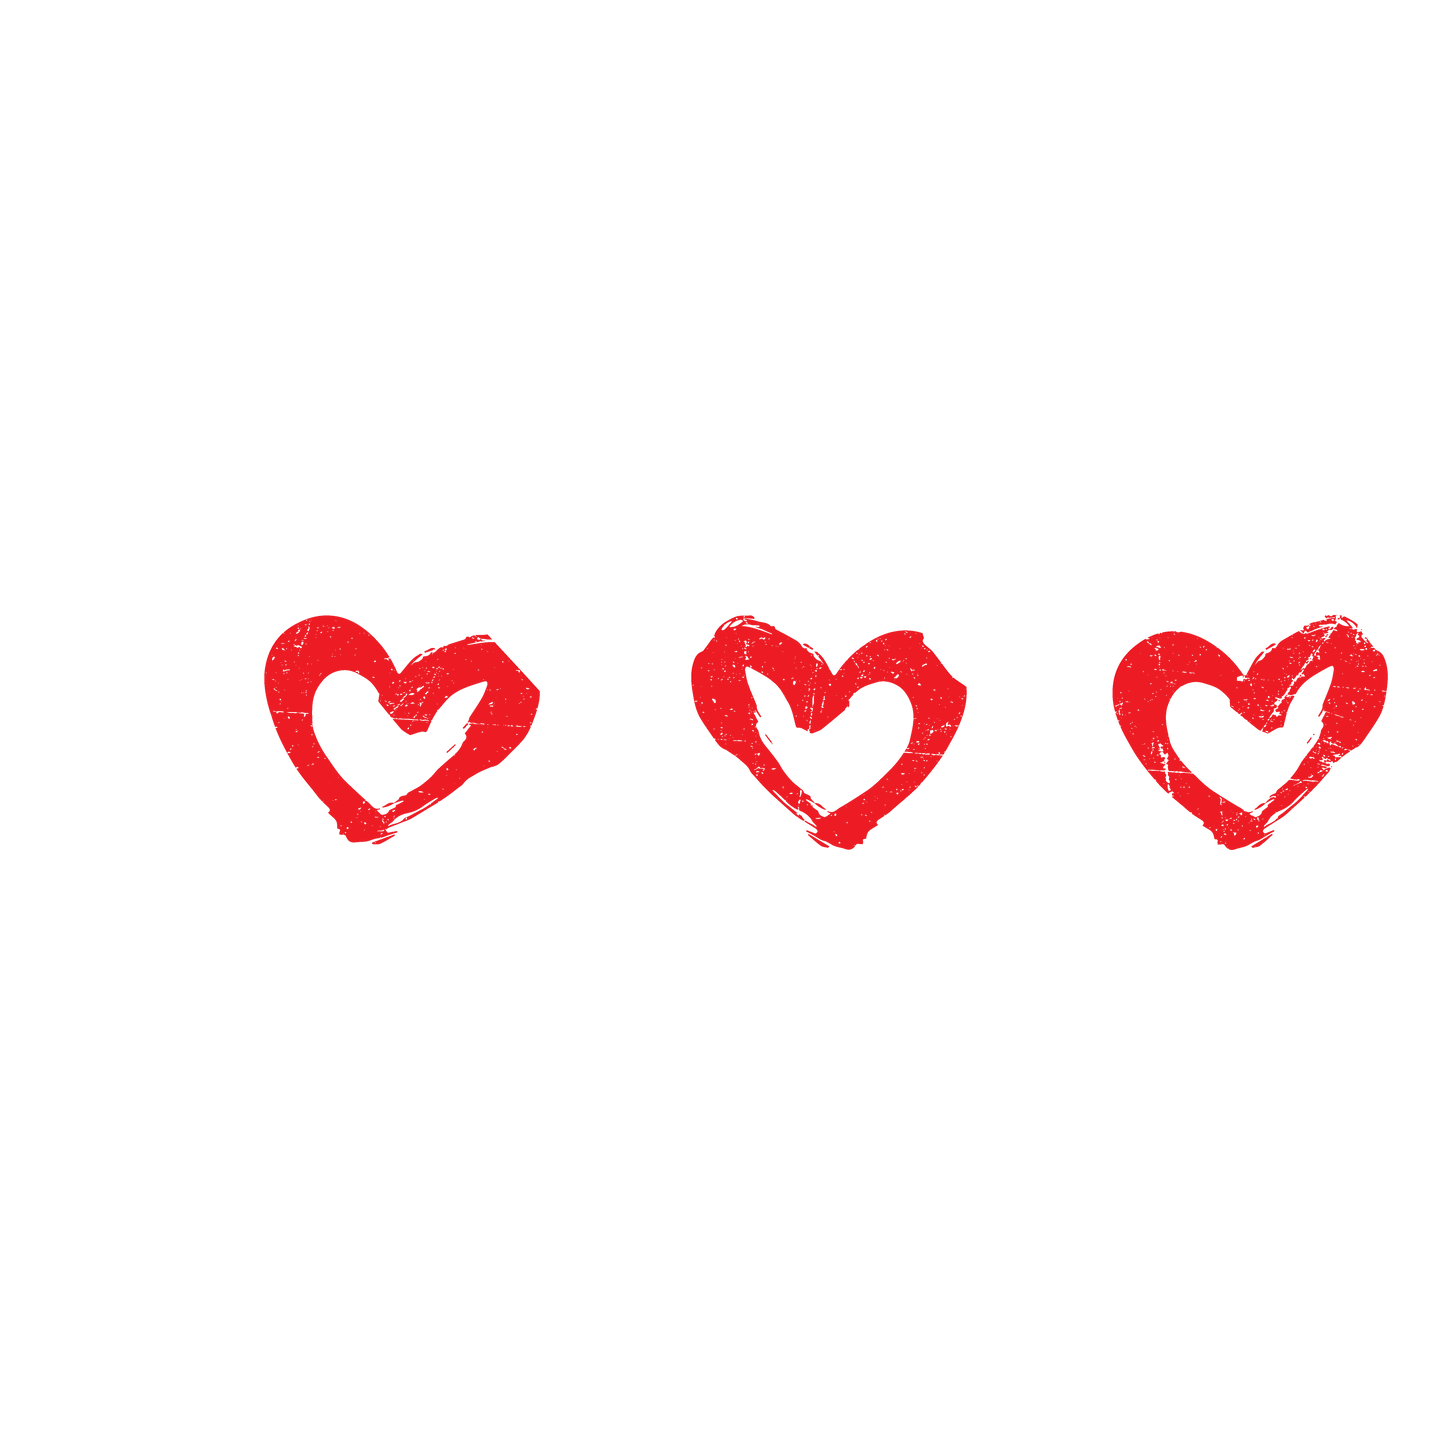 XOXOXO Hearts Valentine Day Tee